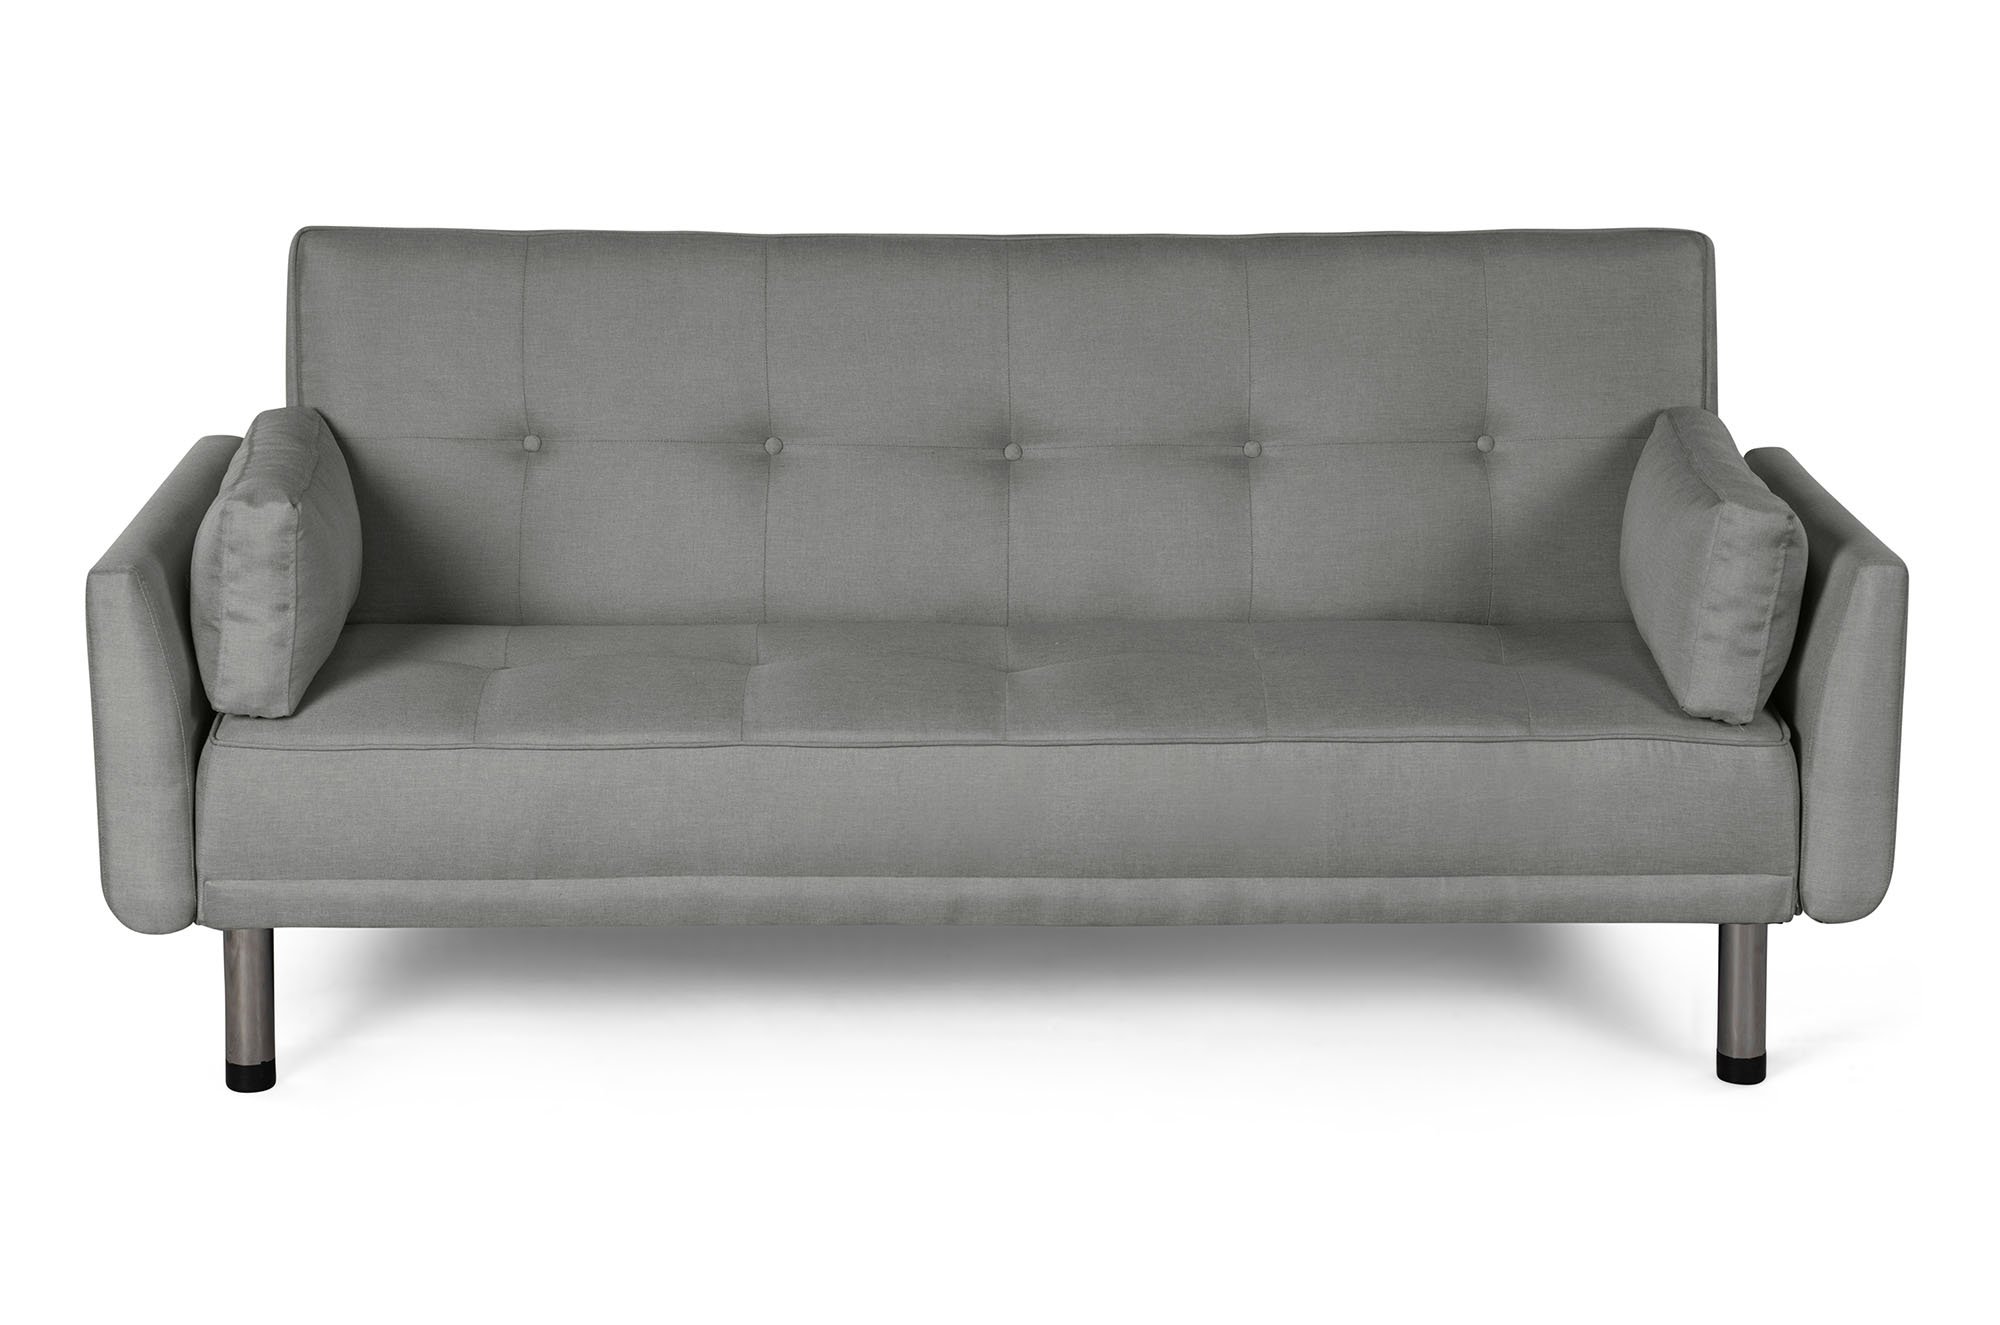 Sofa Cama Plegable Futon Convertible Multiples Posiciones Muebles